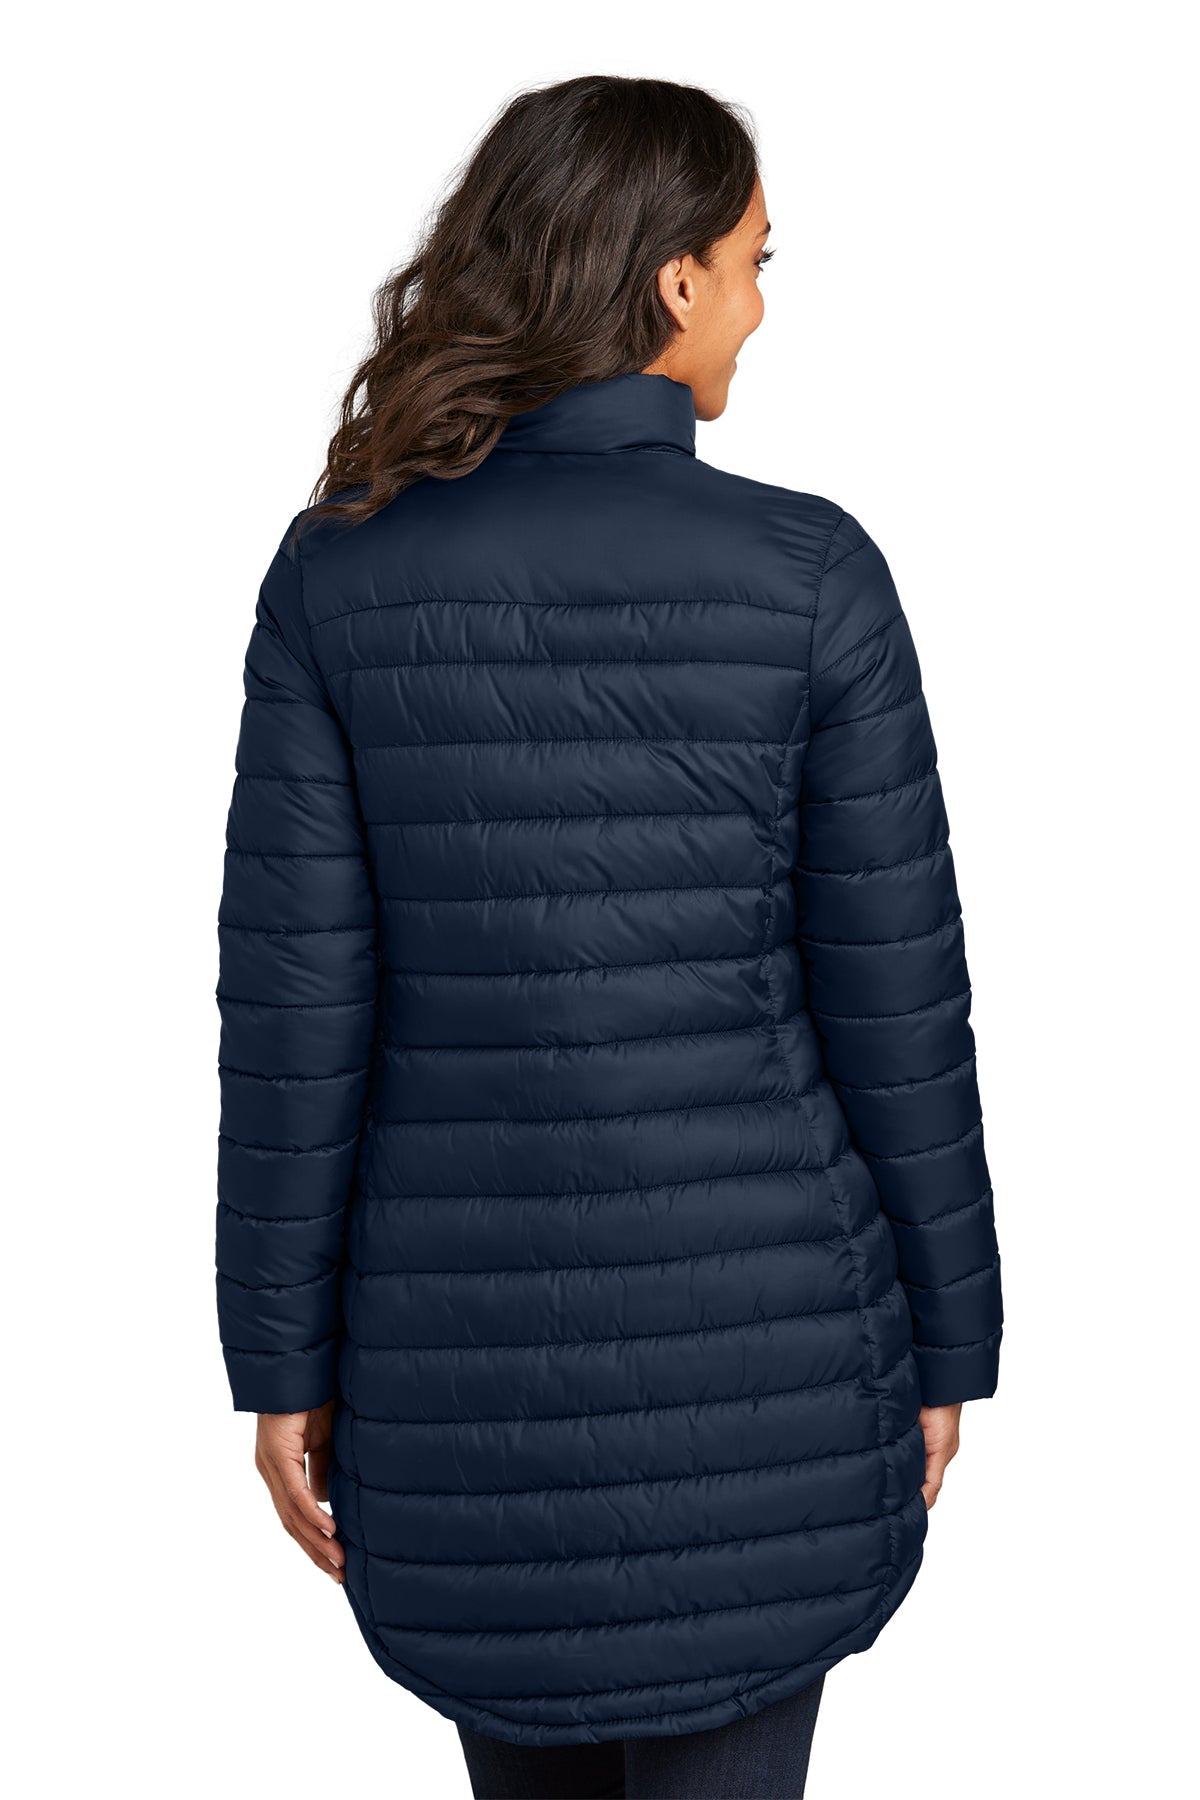 Port Authority Arc Sweater Fleece Custom Jackets, Dress Blue Navy